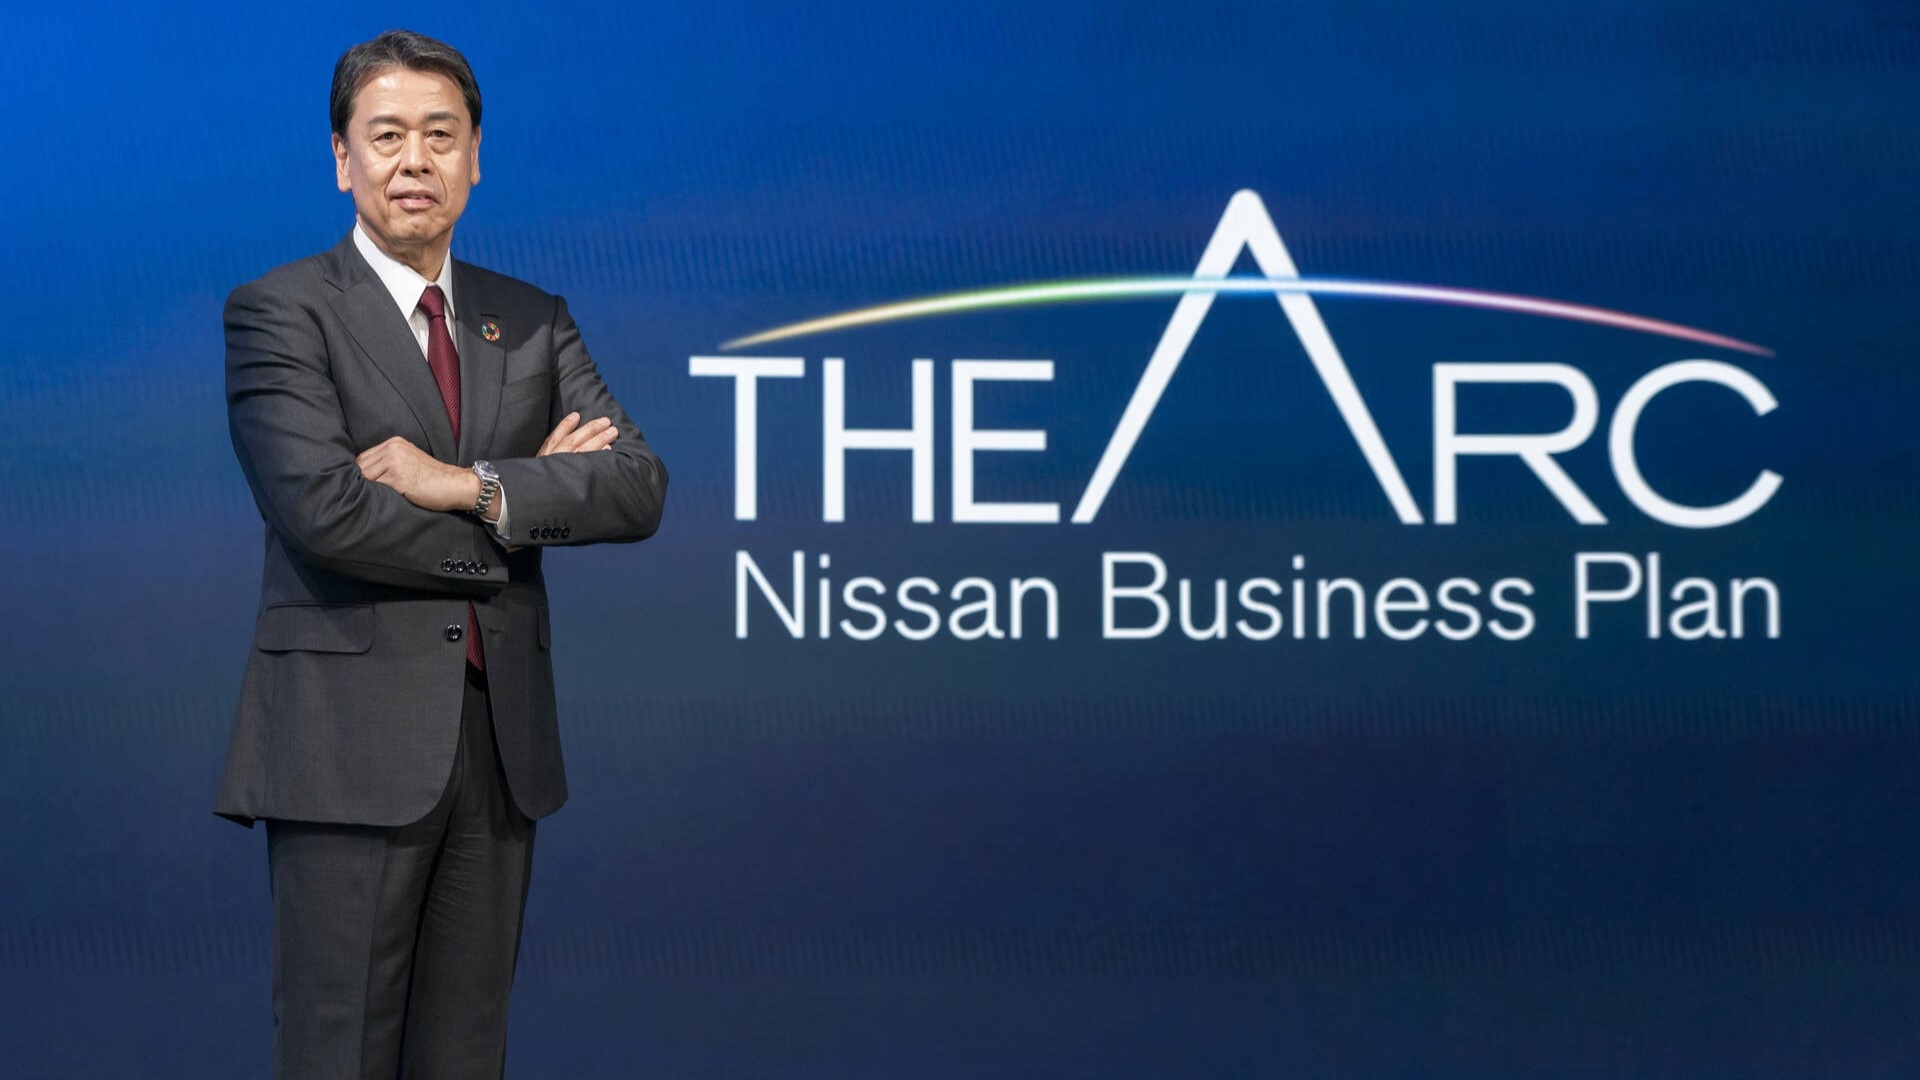 Nissan CEO Makoto Uchida Launching The Arc Business Plan (Credits: Nissan)